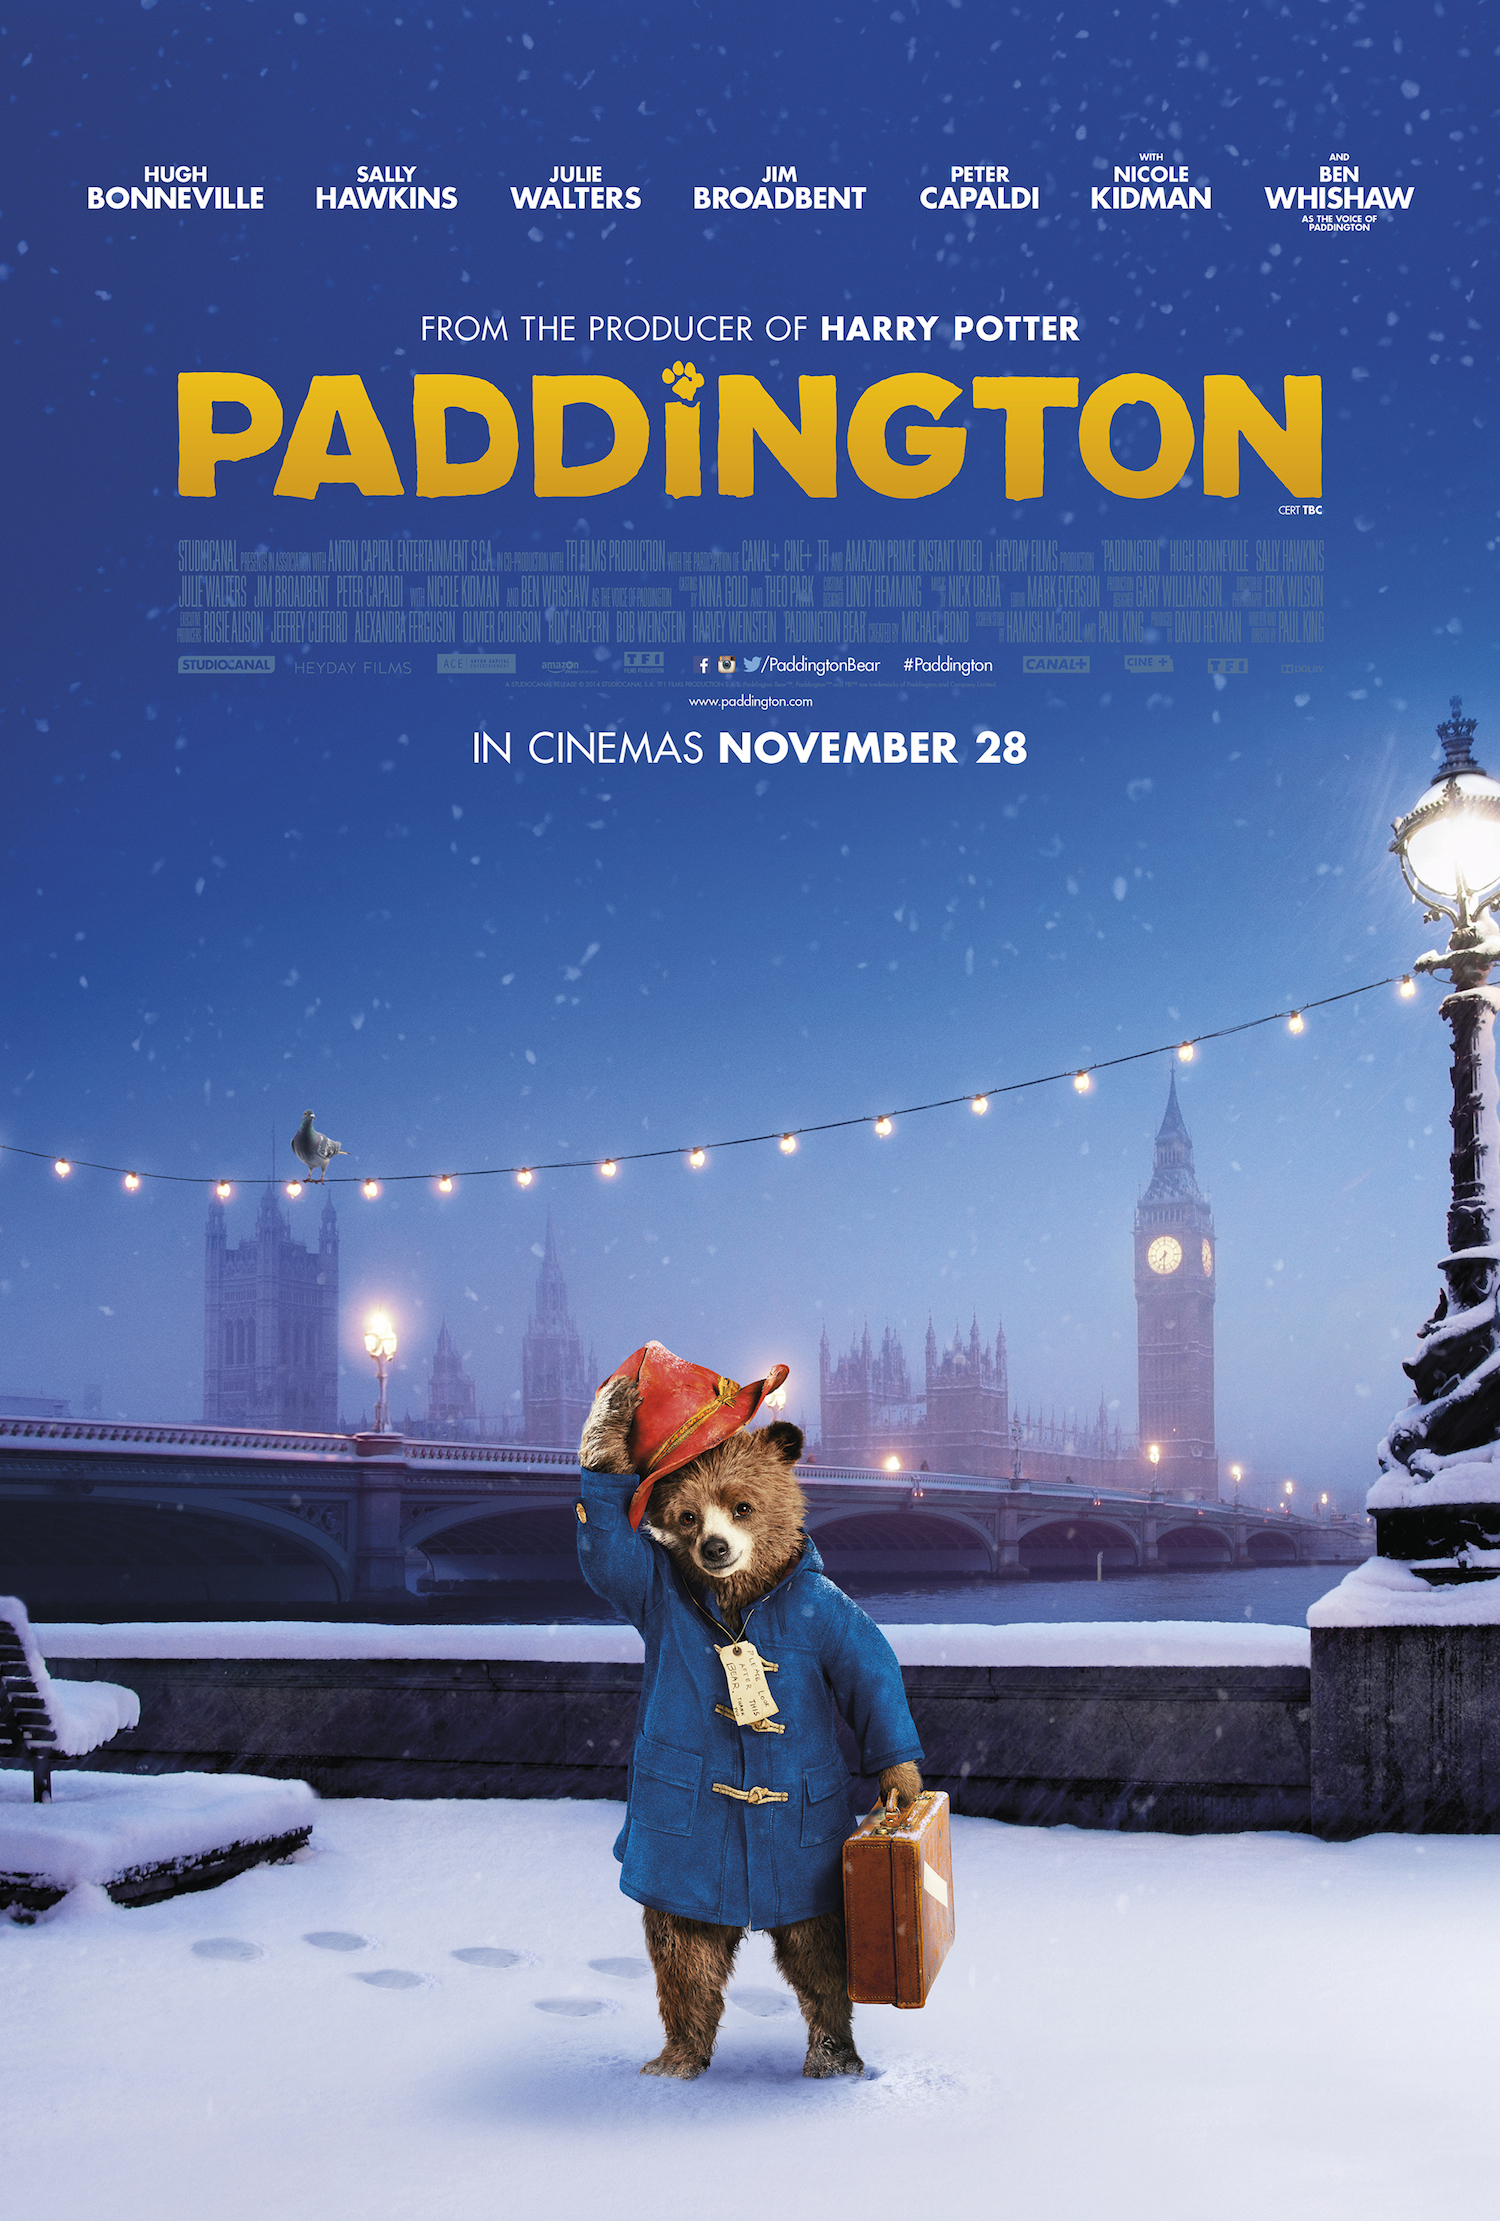 Paul King To Direct Paddington Sequel